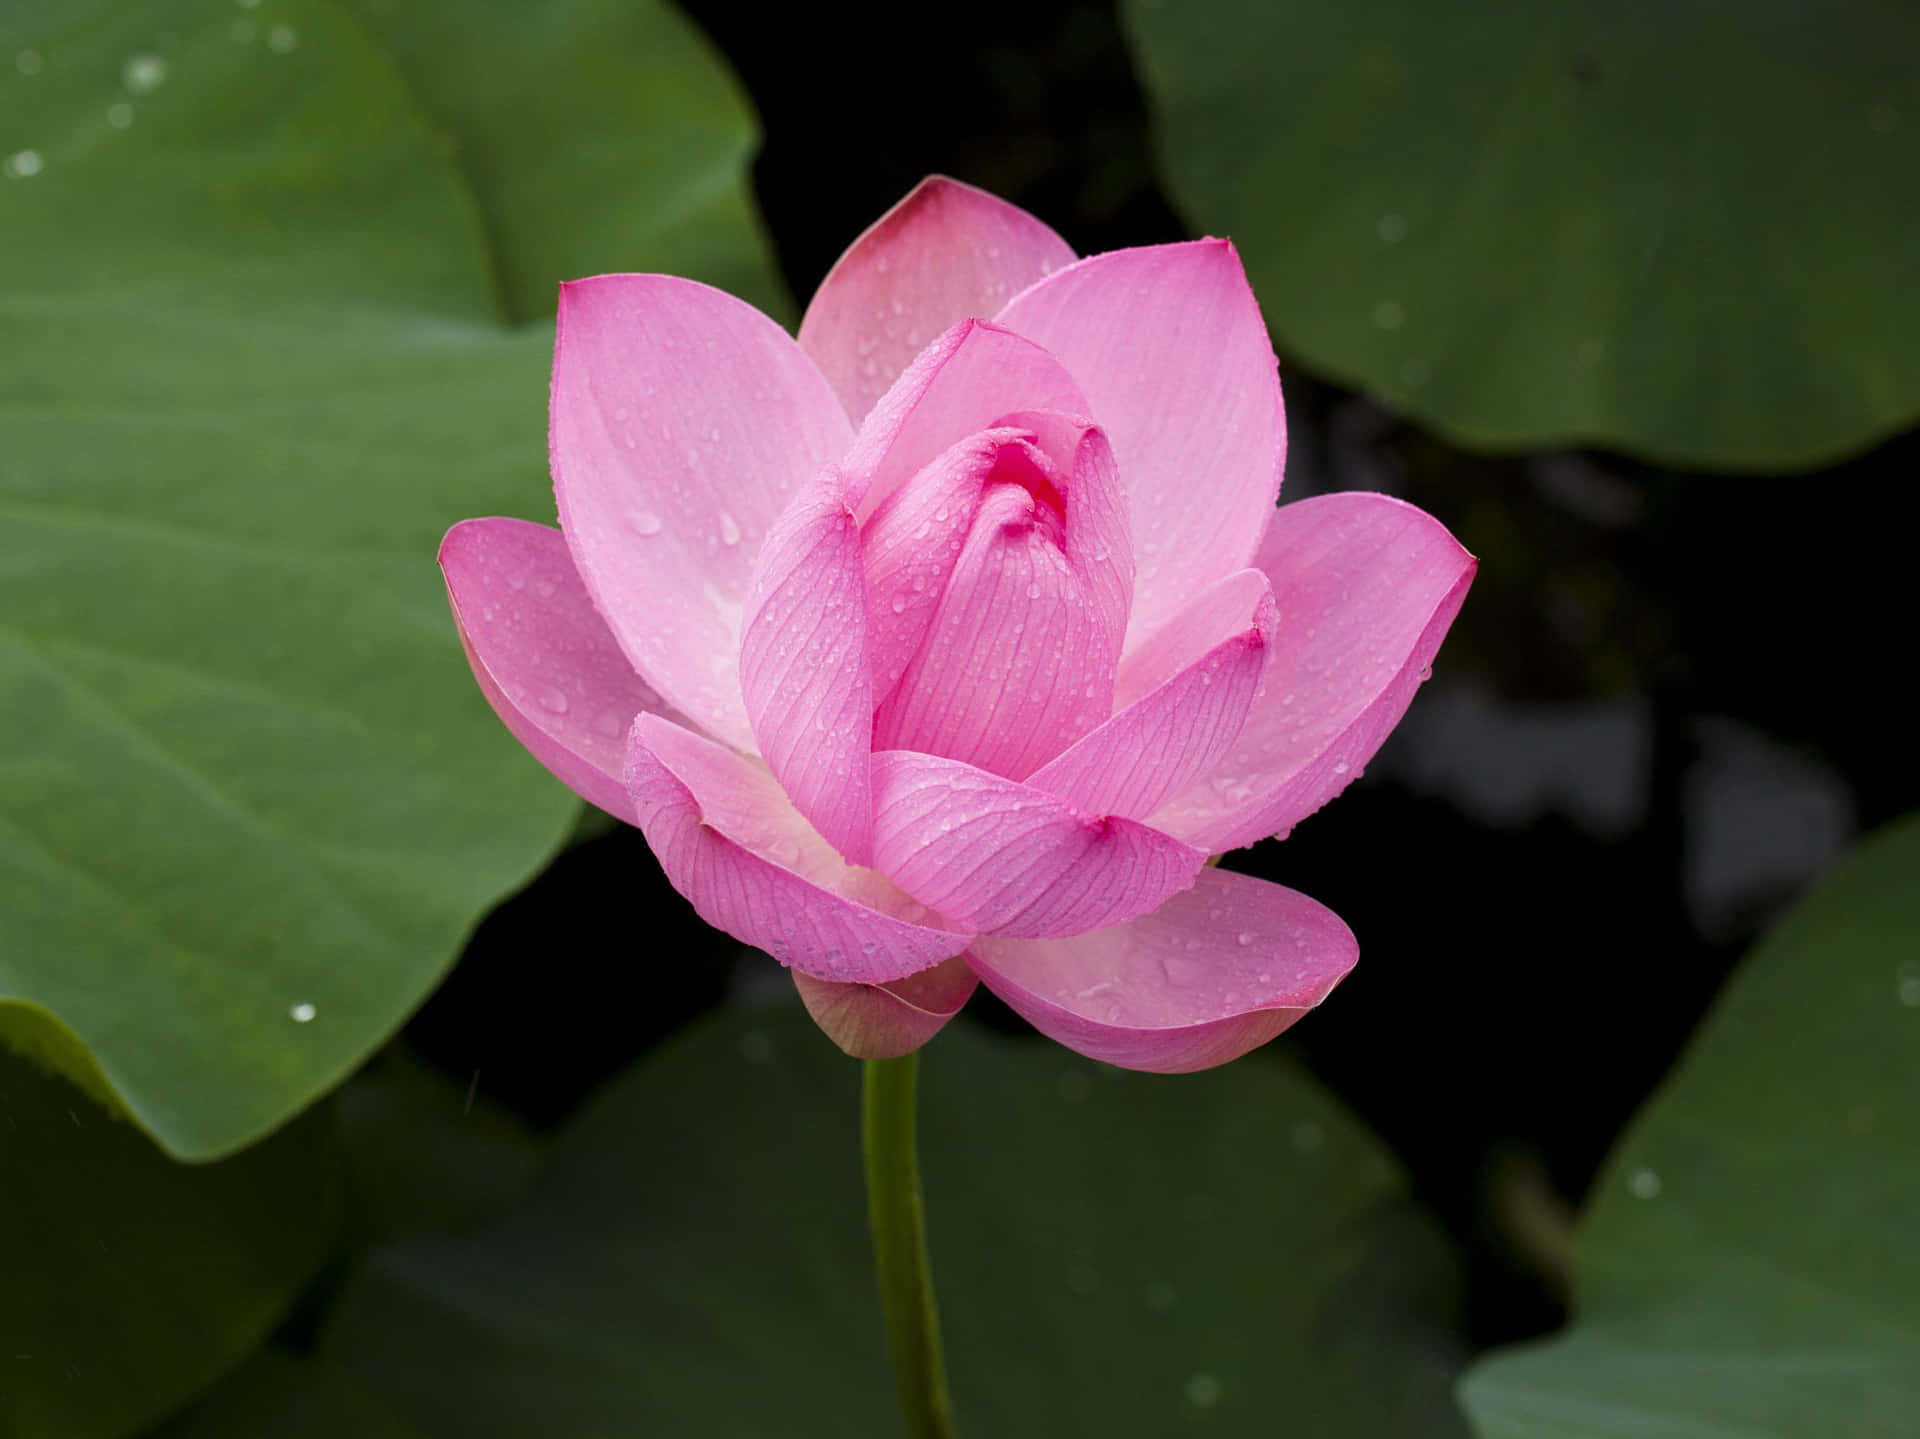 Stunning Lotus Flower in Full Bloom